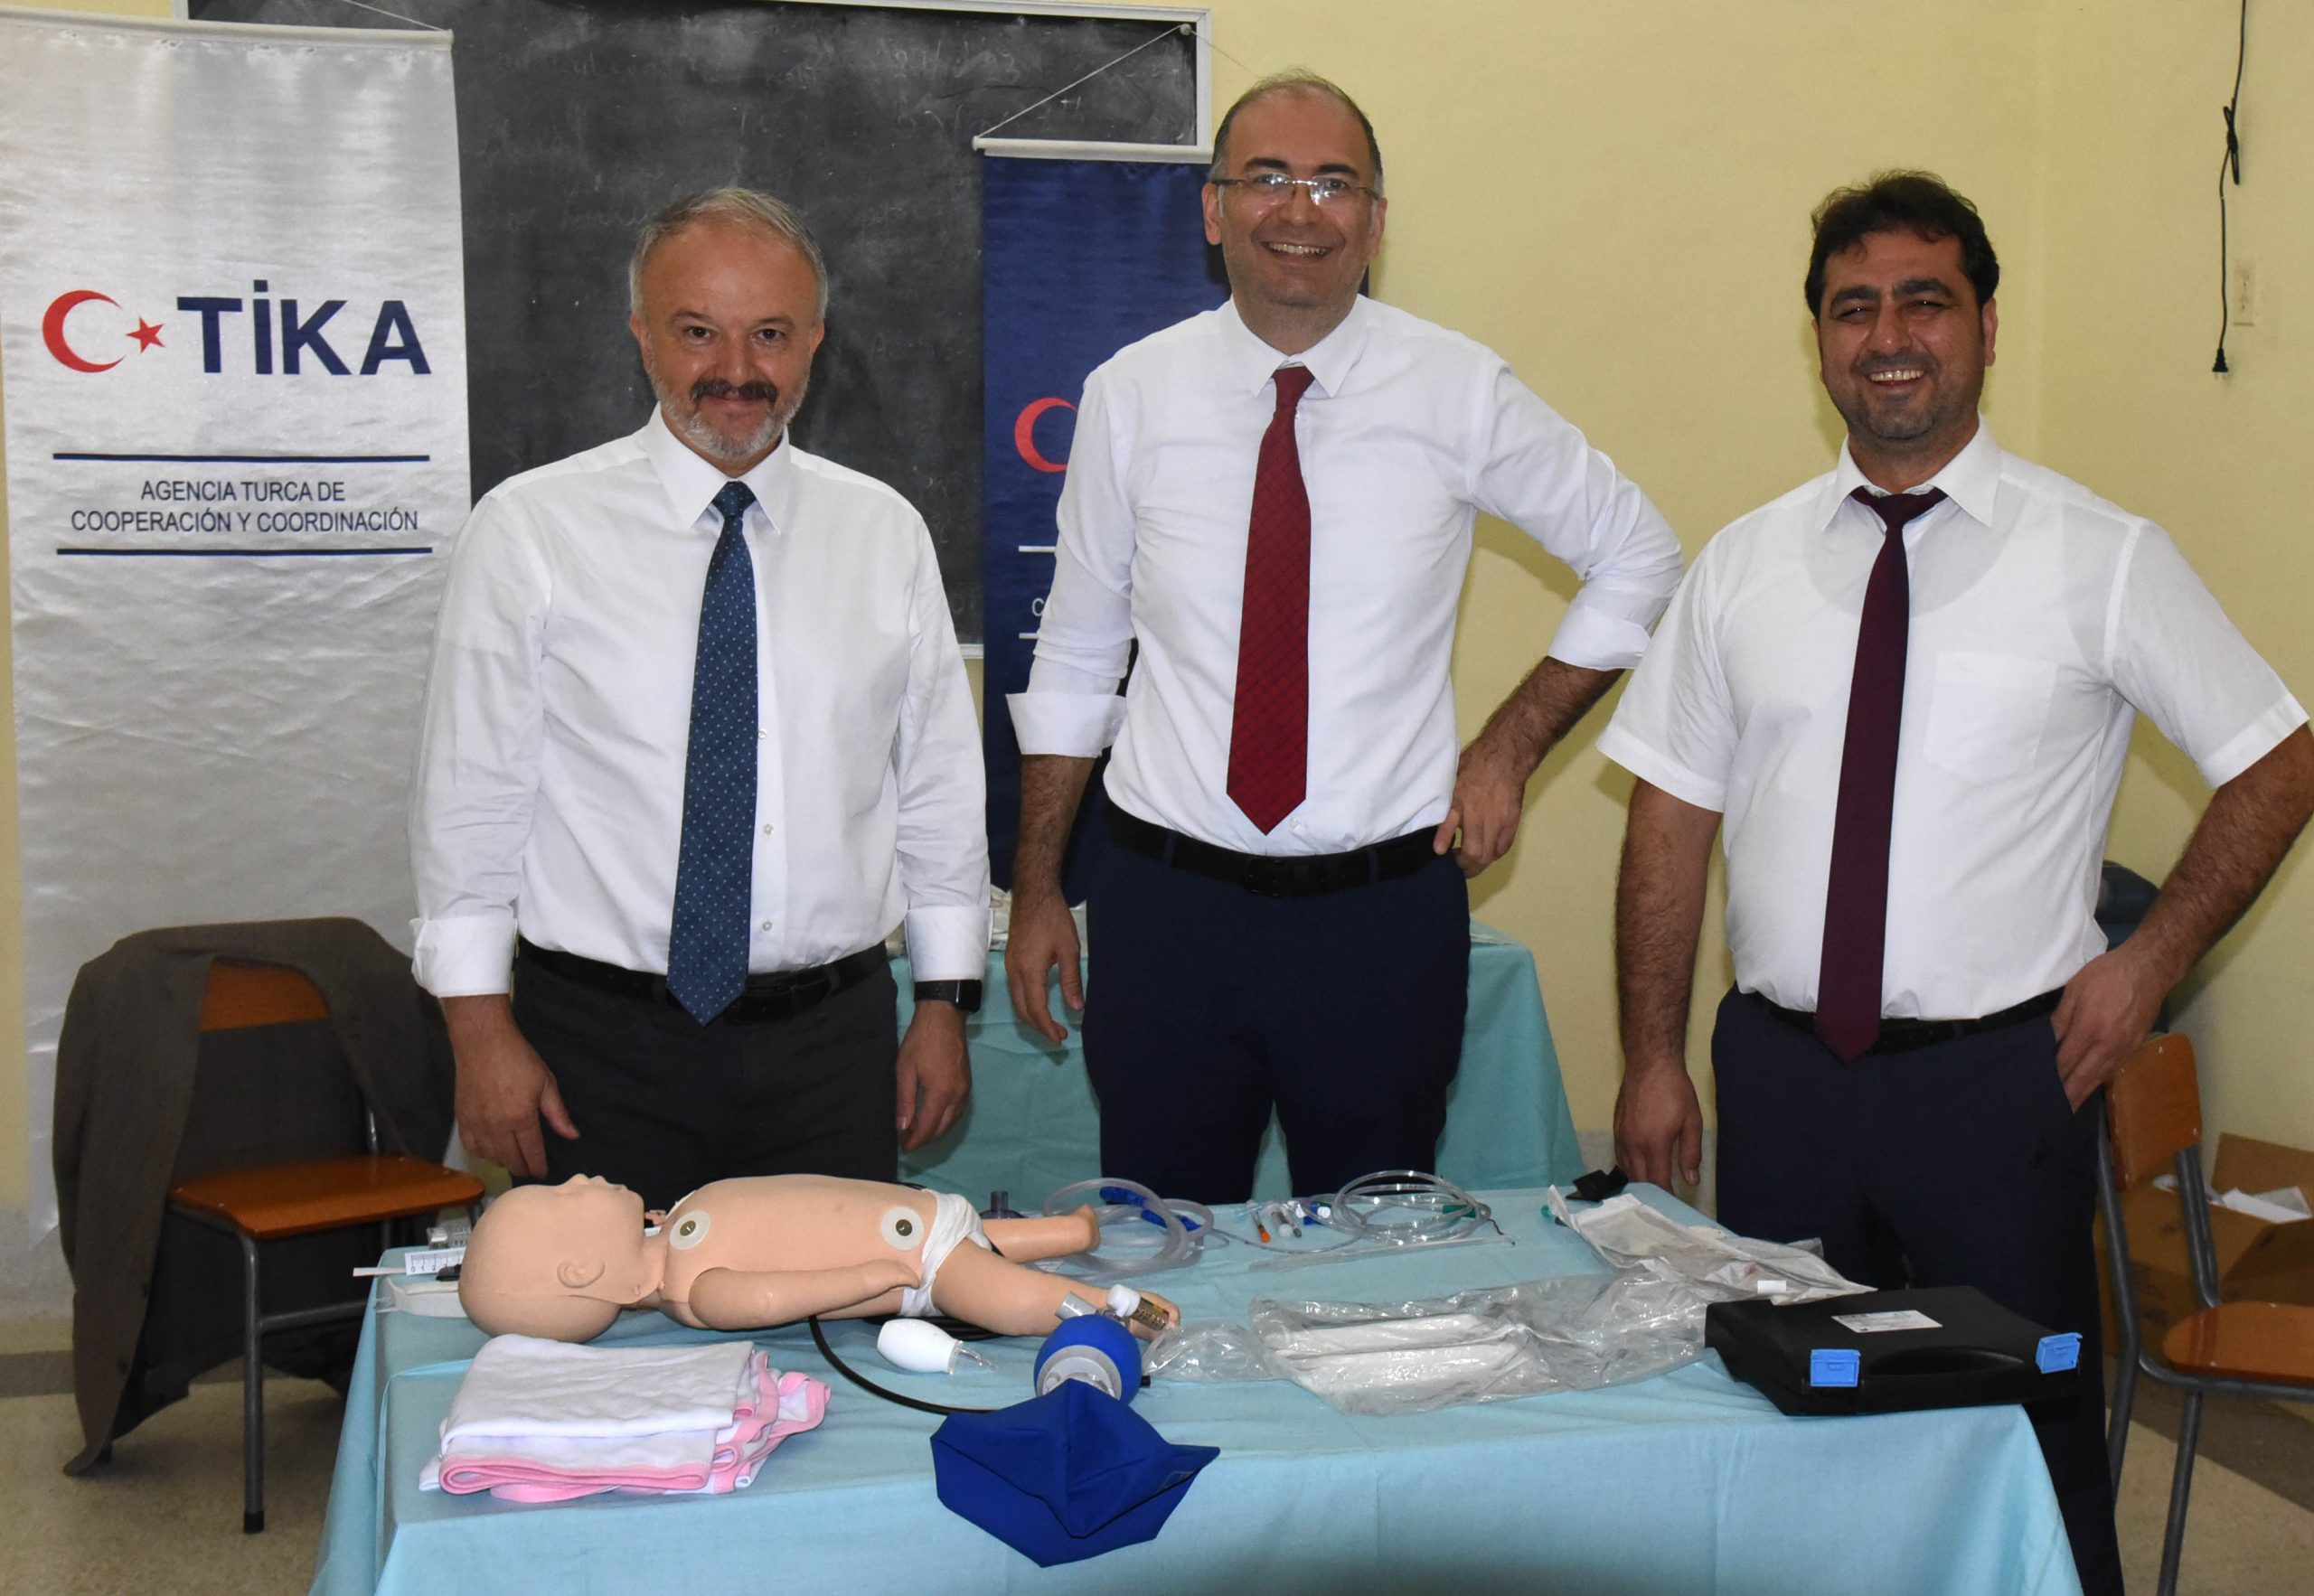  Türkiye donates medical equipment to maternal hospital in Cuba 